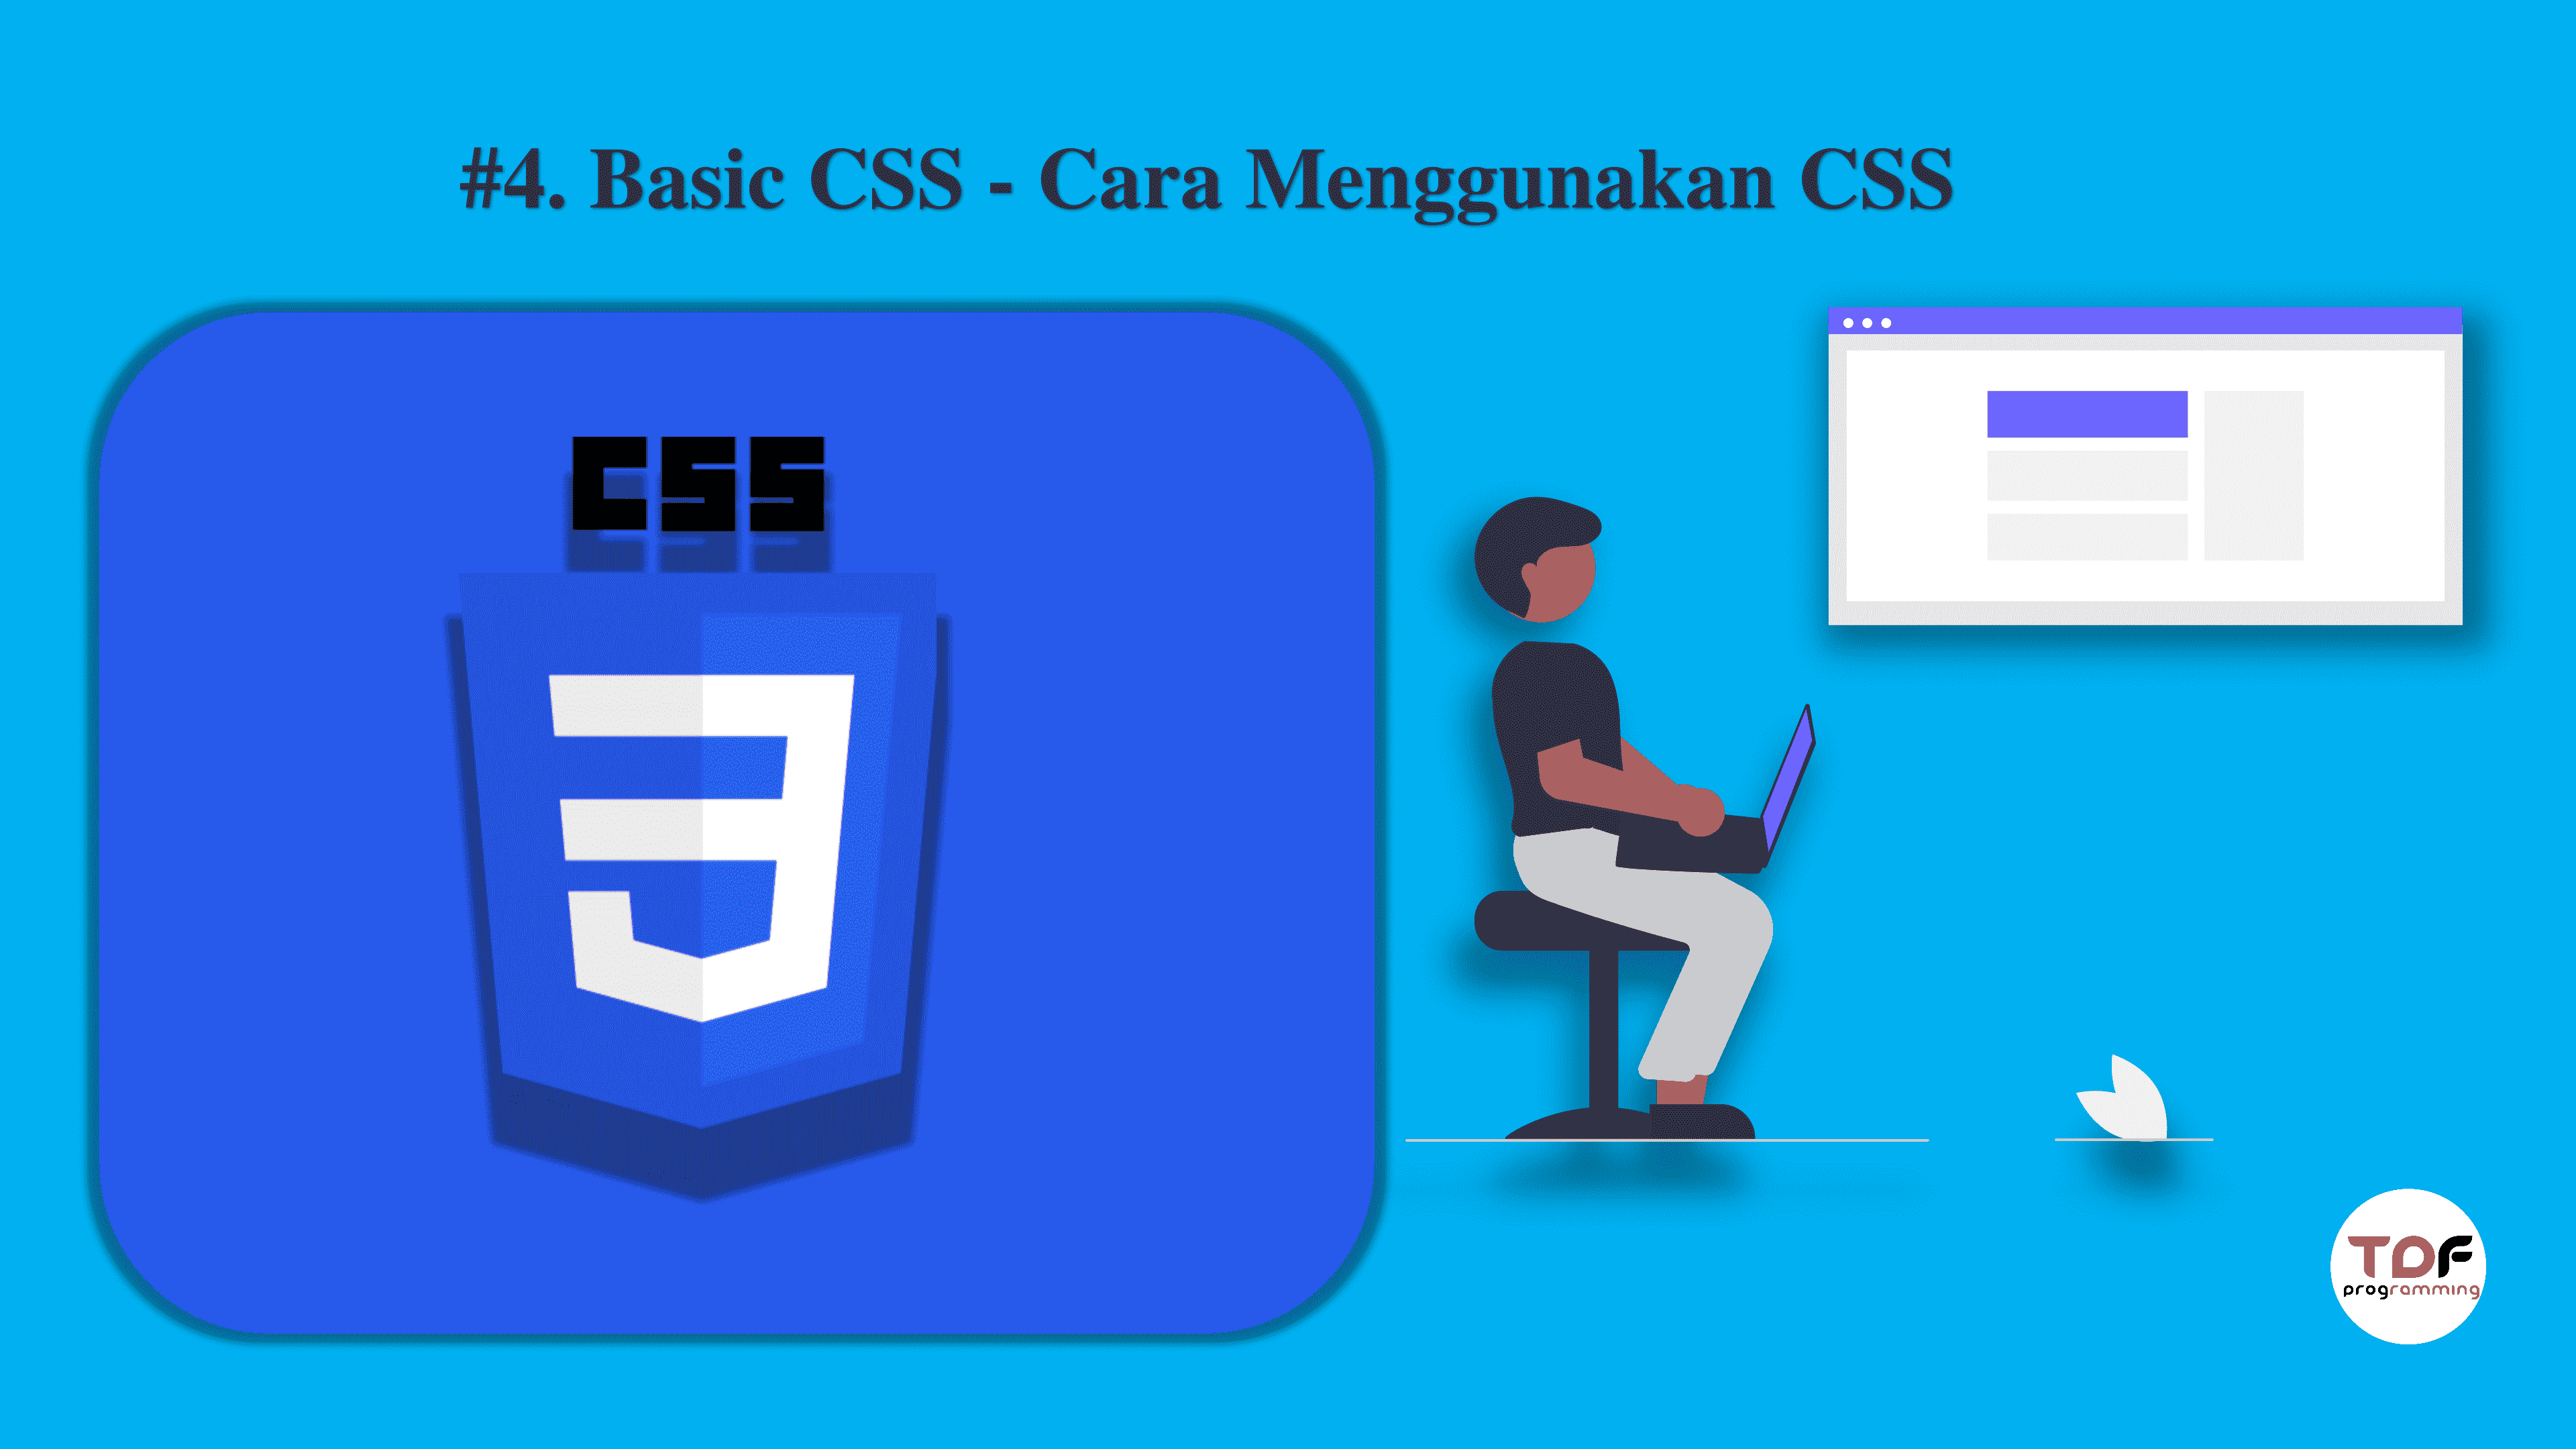 Basic CSS - Cara Menggunakan CSS